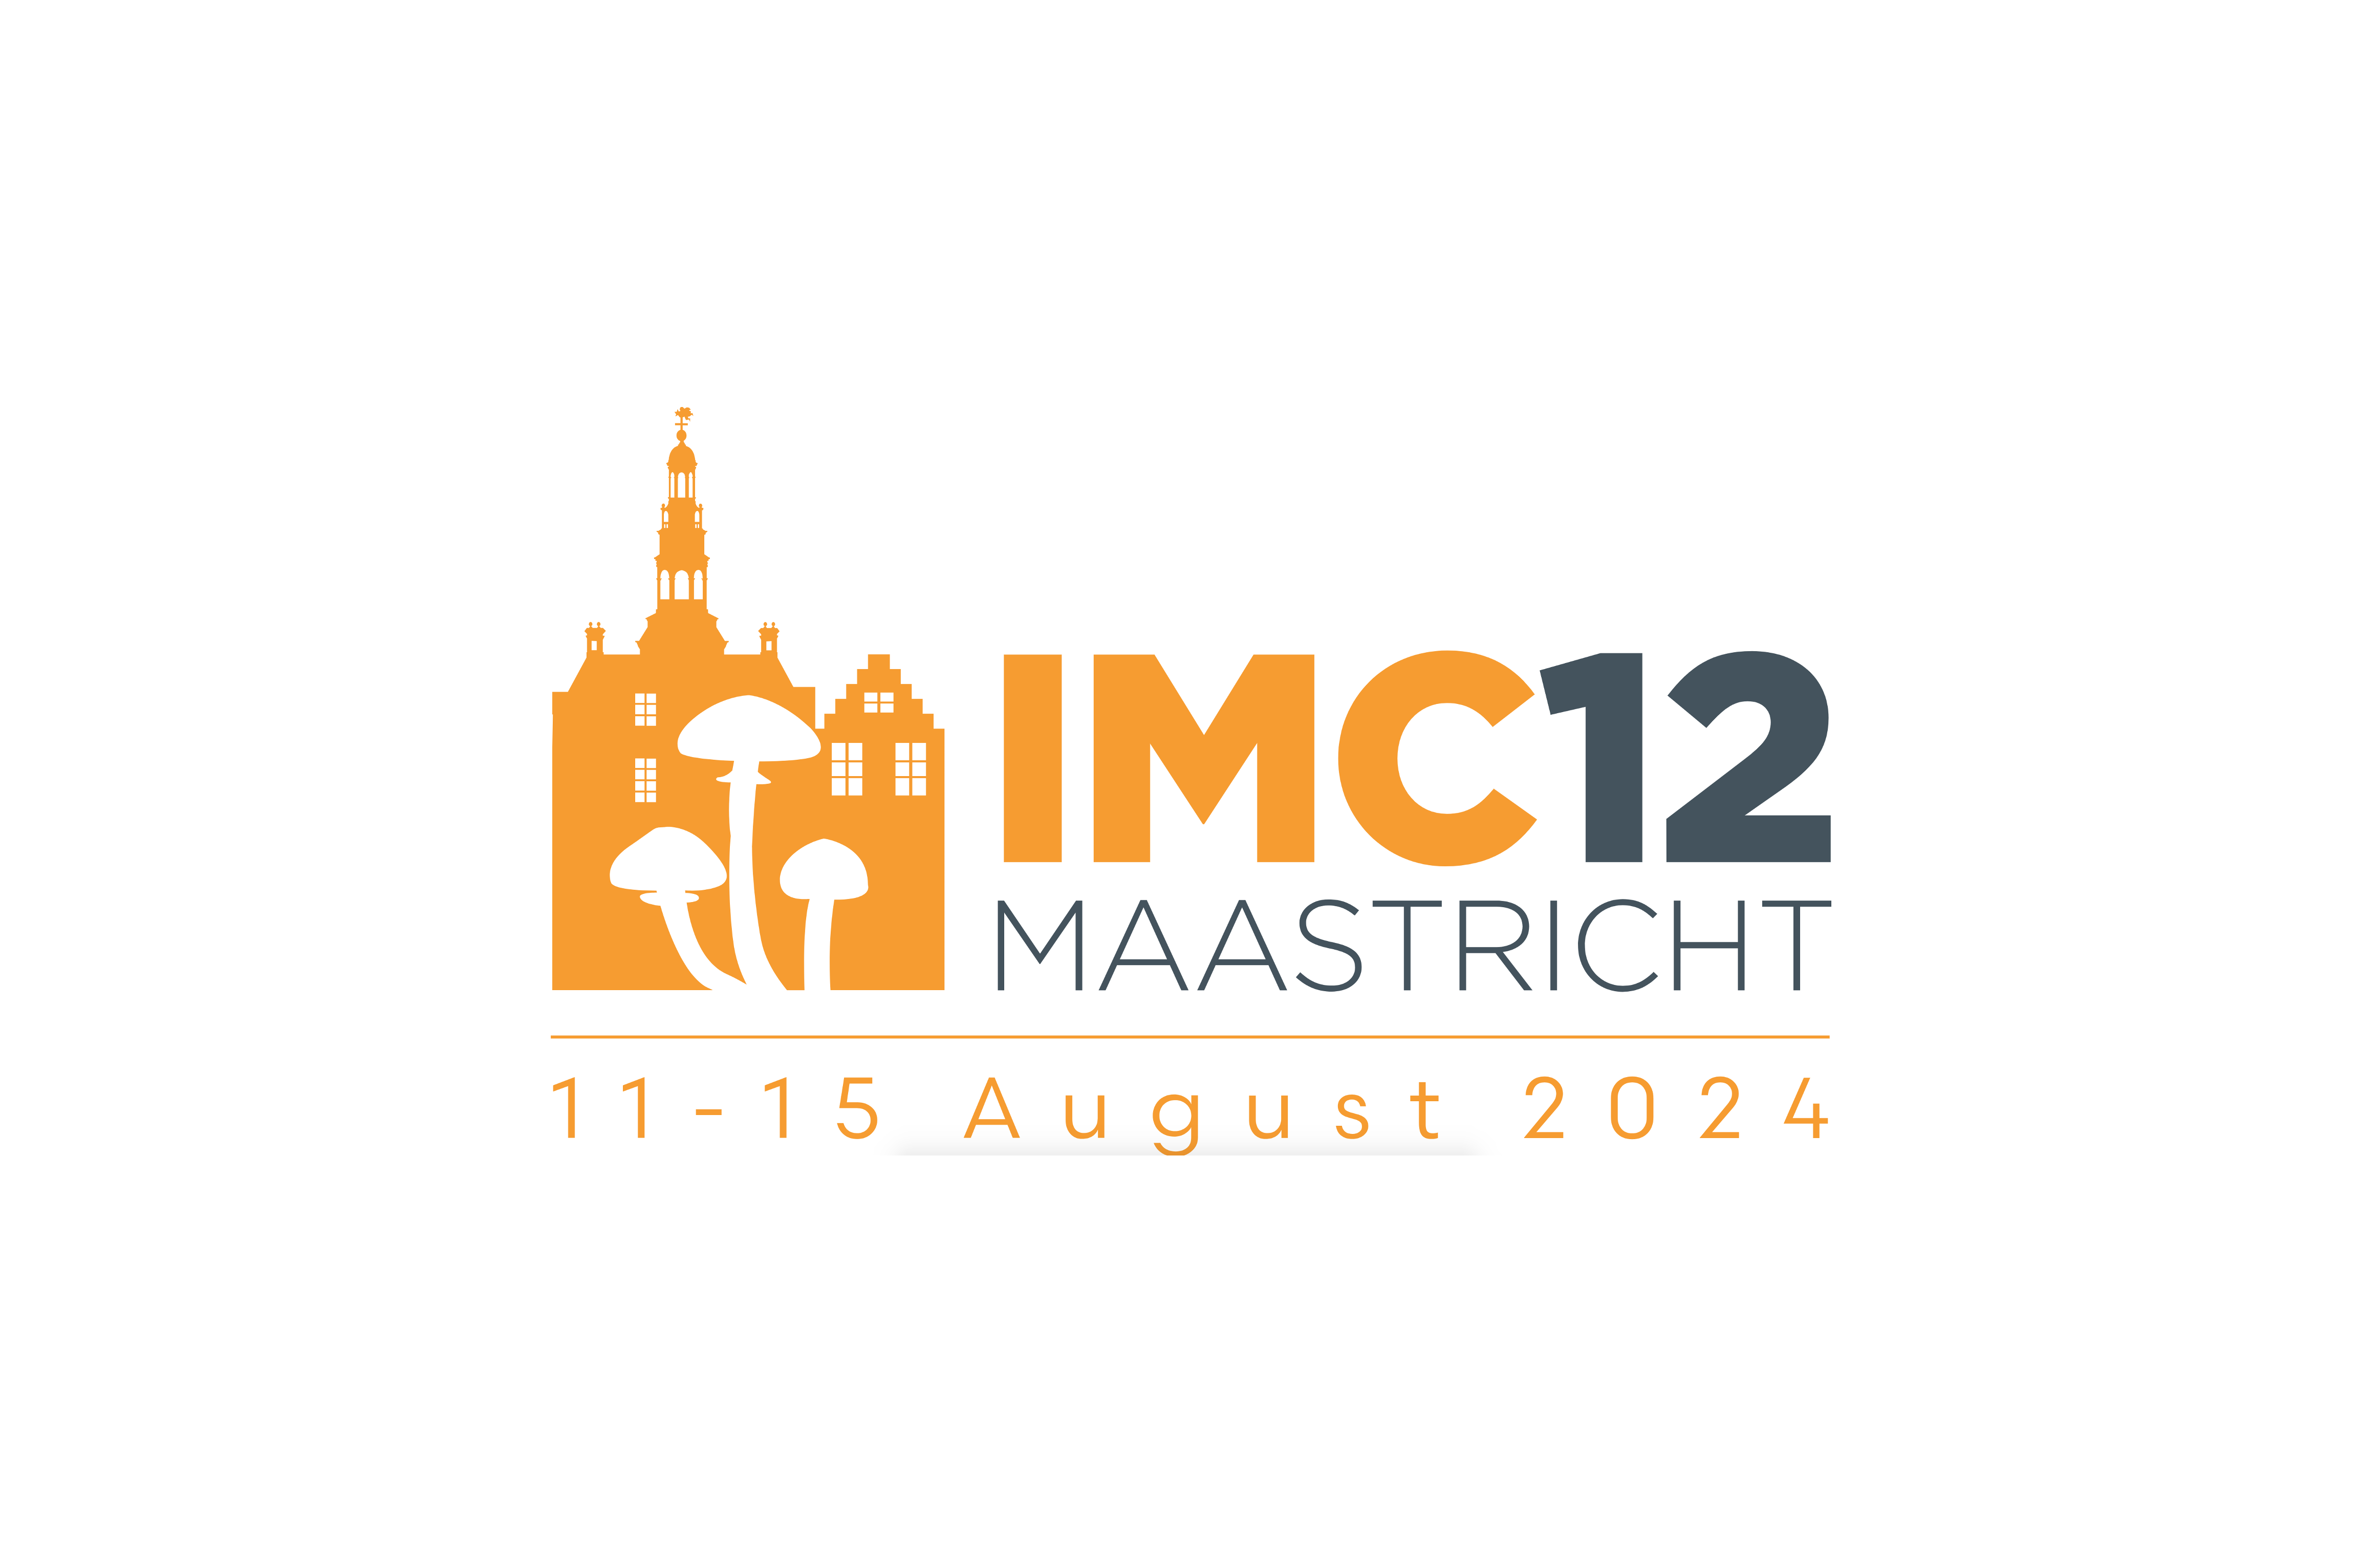 Logotyp för International Mycological Congress (IMC12),